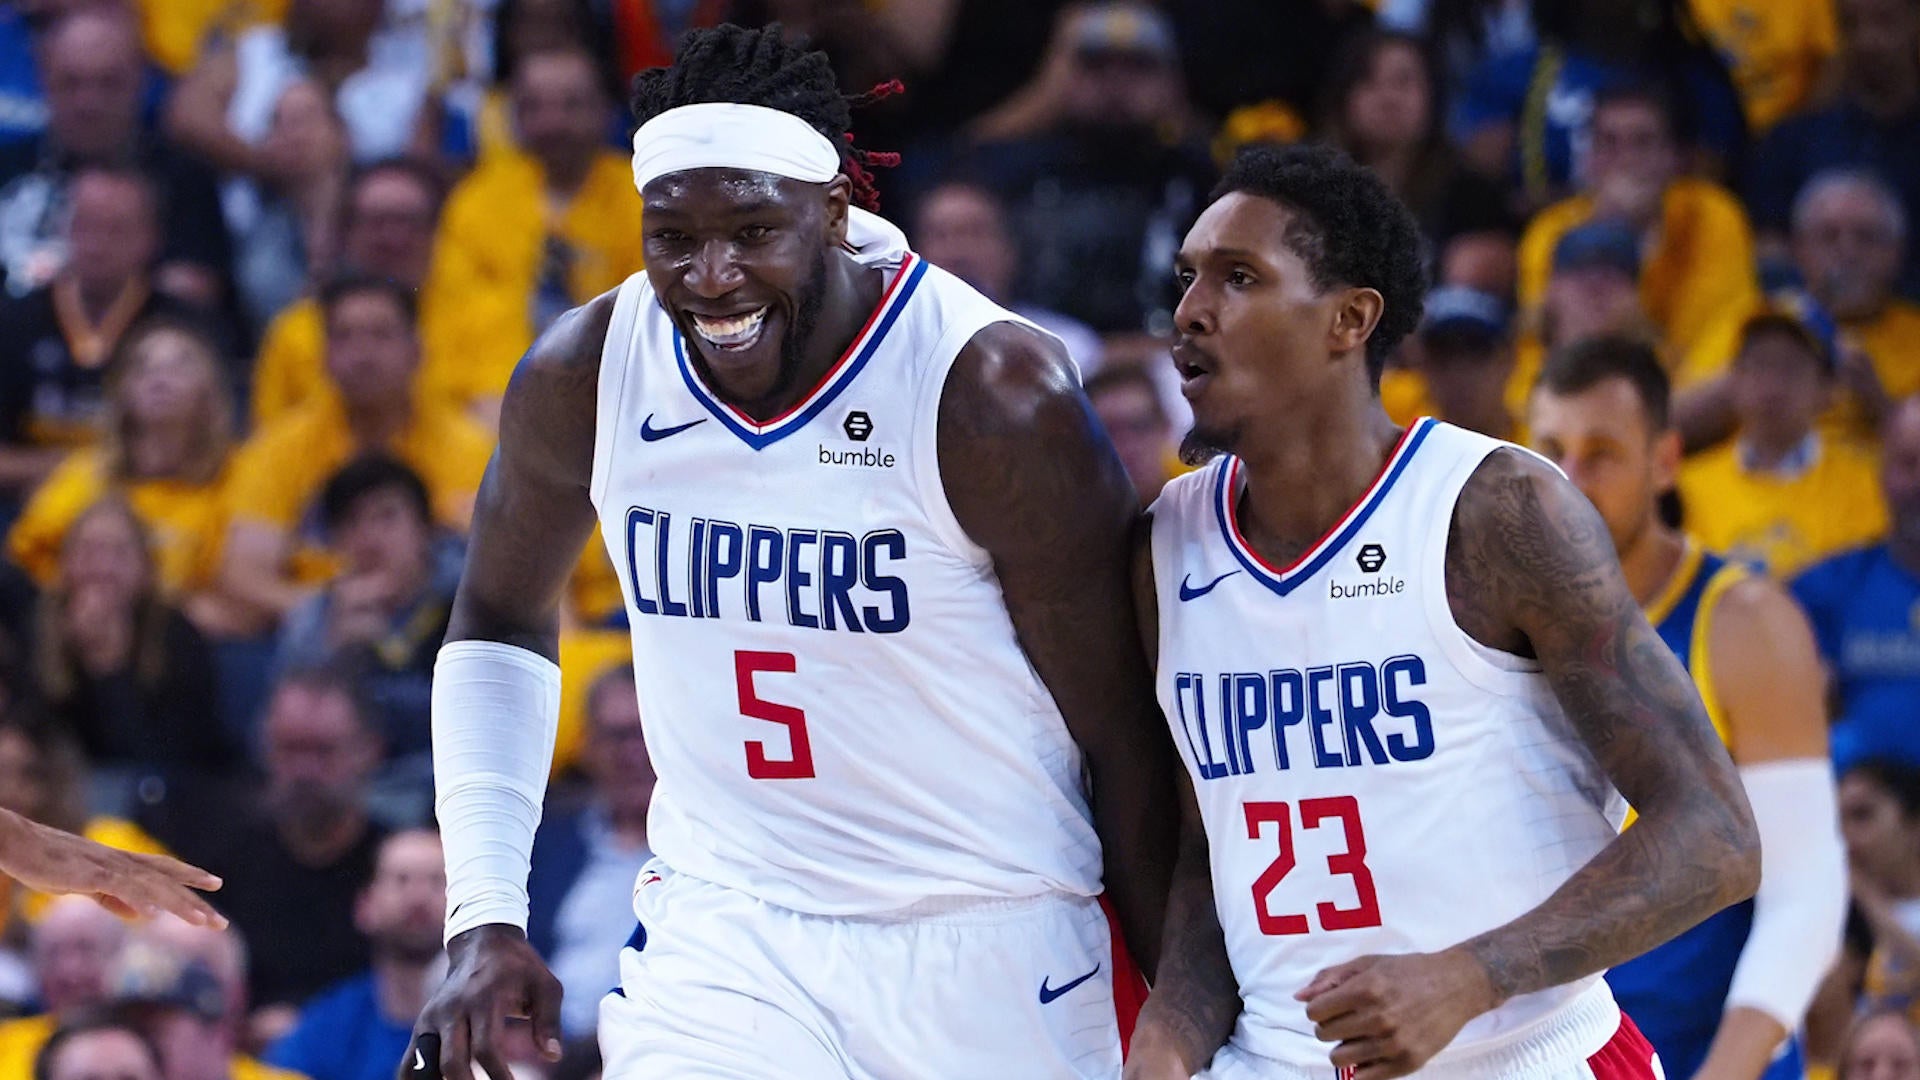 Flipboard: NBA Playoffs 2019: Watch Warriors vs. Clippers Game 6, series schedule ...